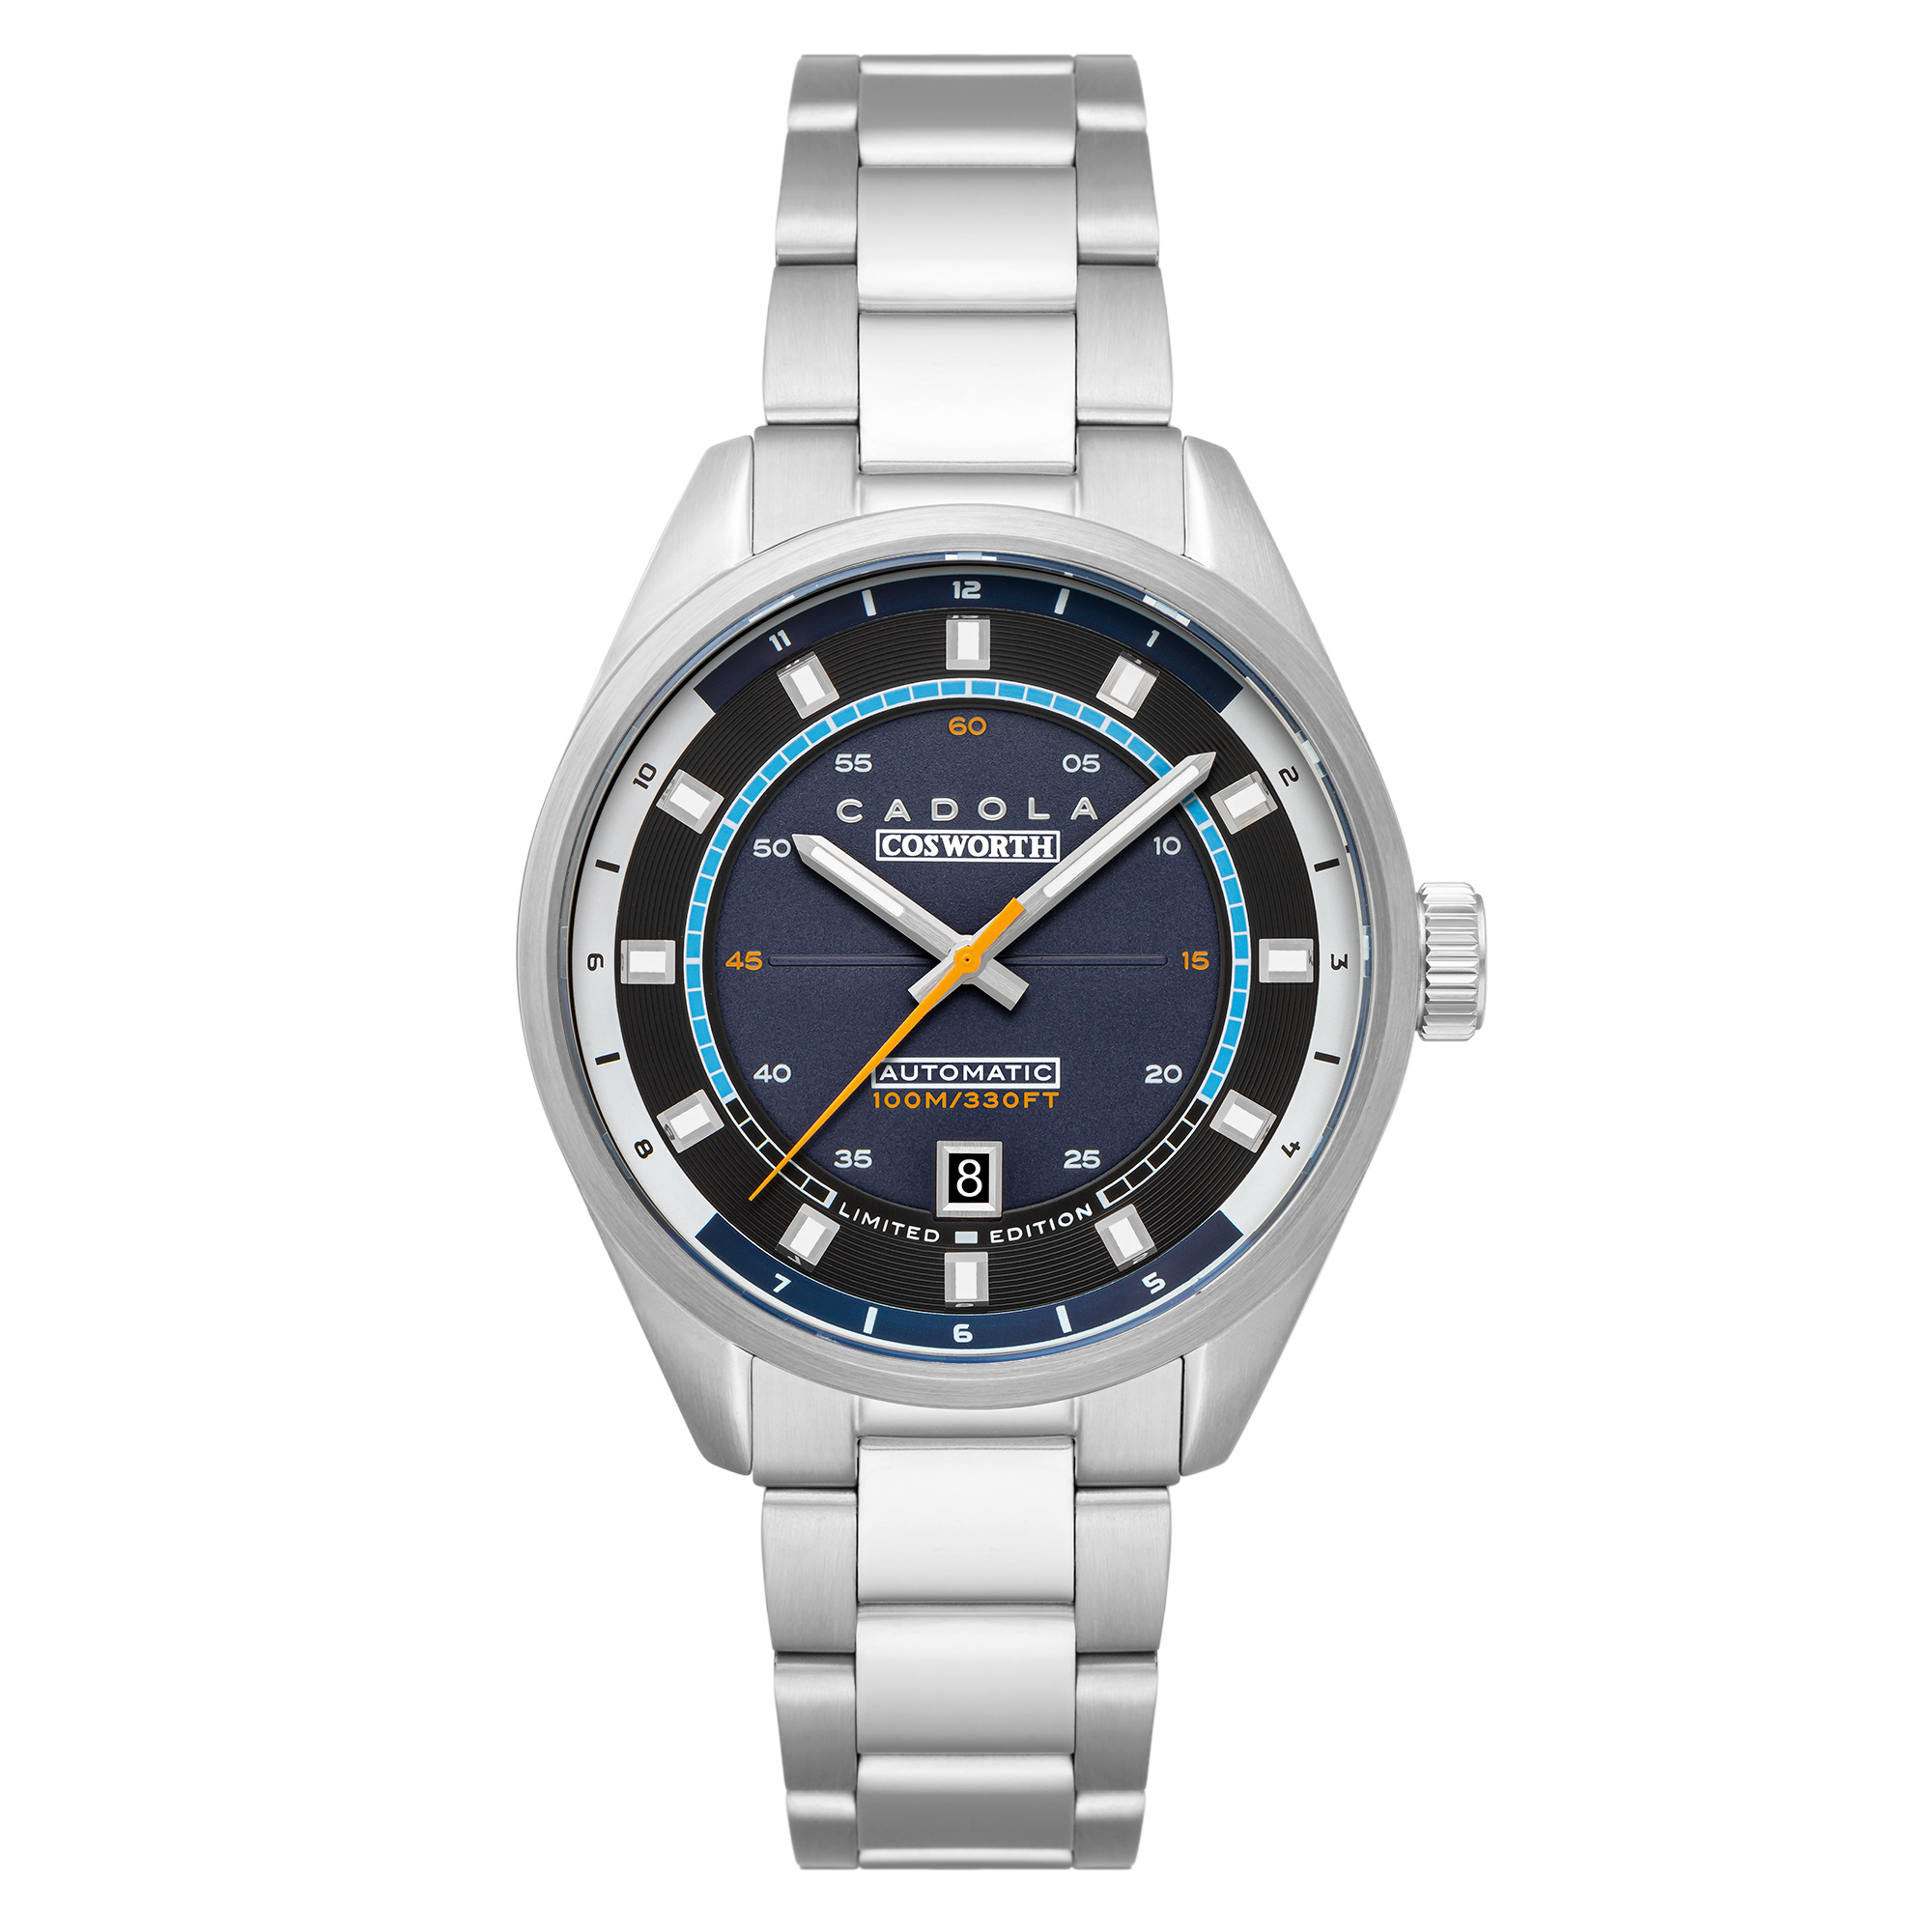 CADOLA Cadola Men's Nigel Blue Limited Edition Automaitc Watch CD-1025-22